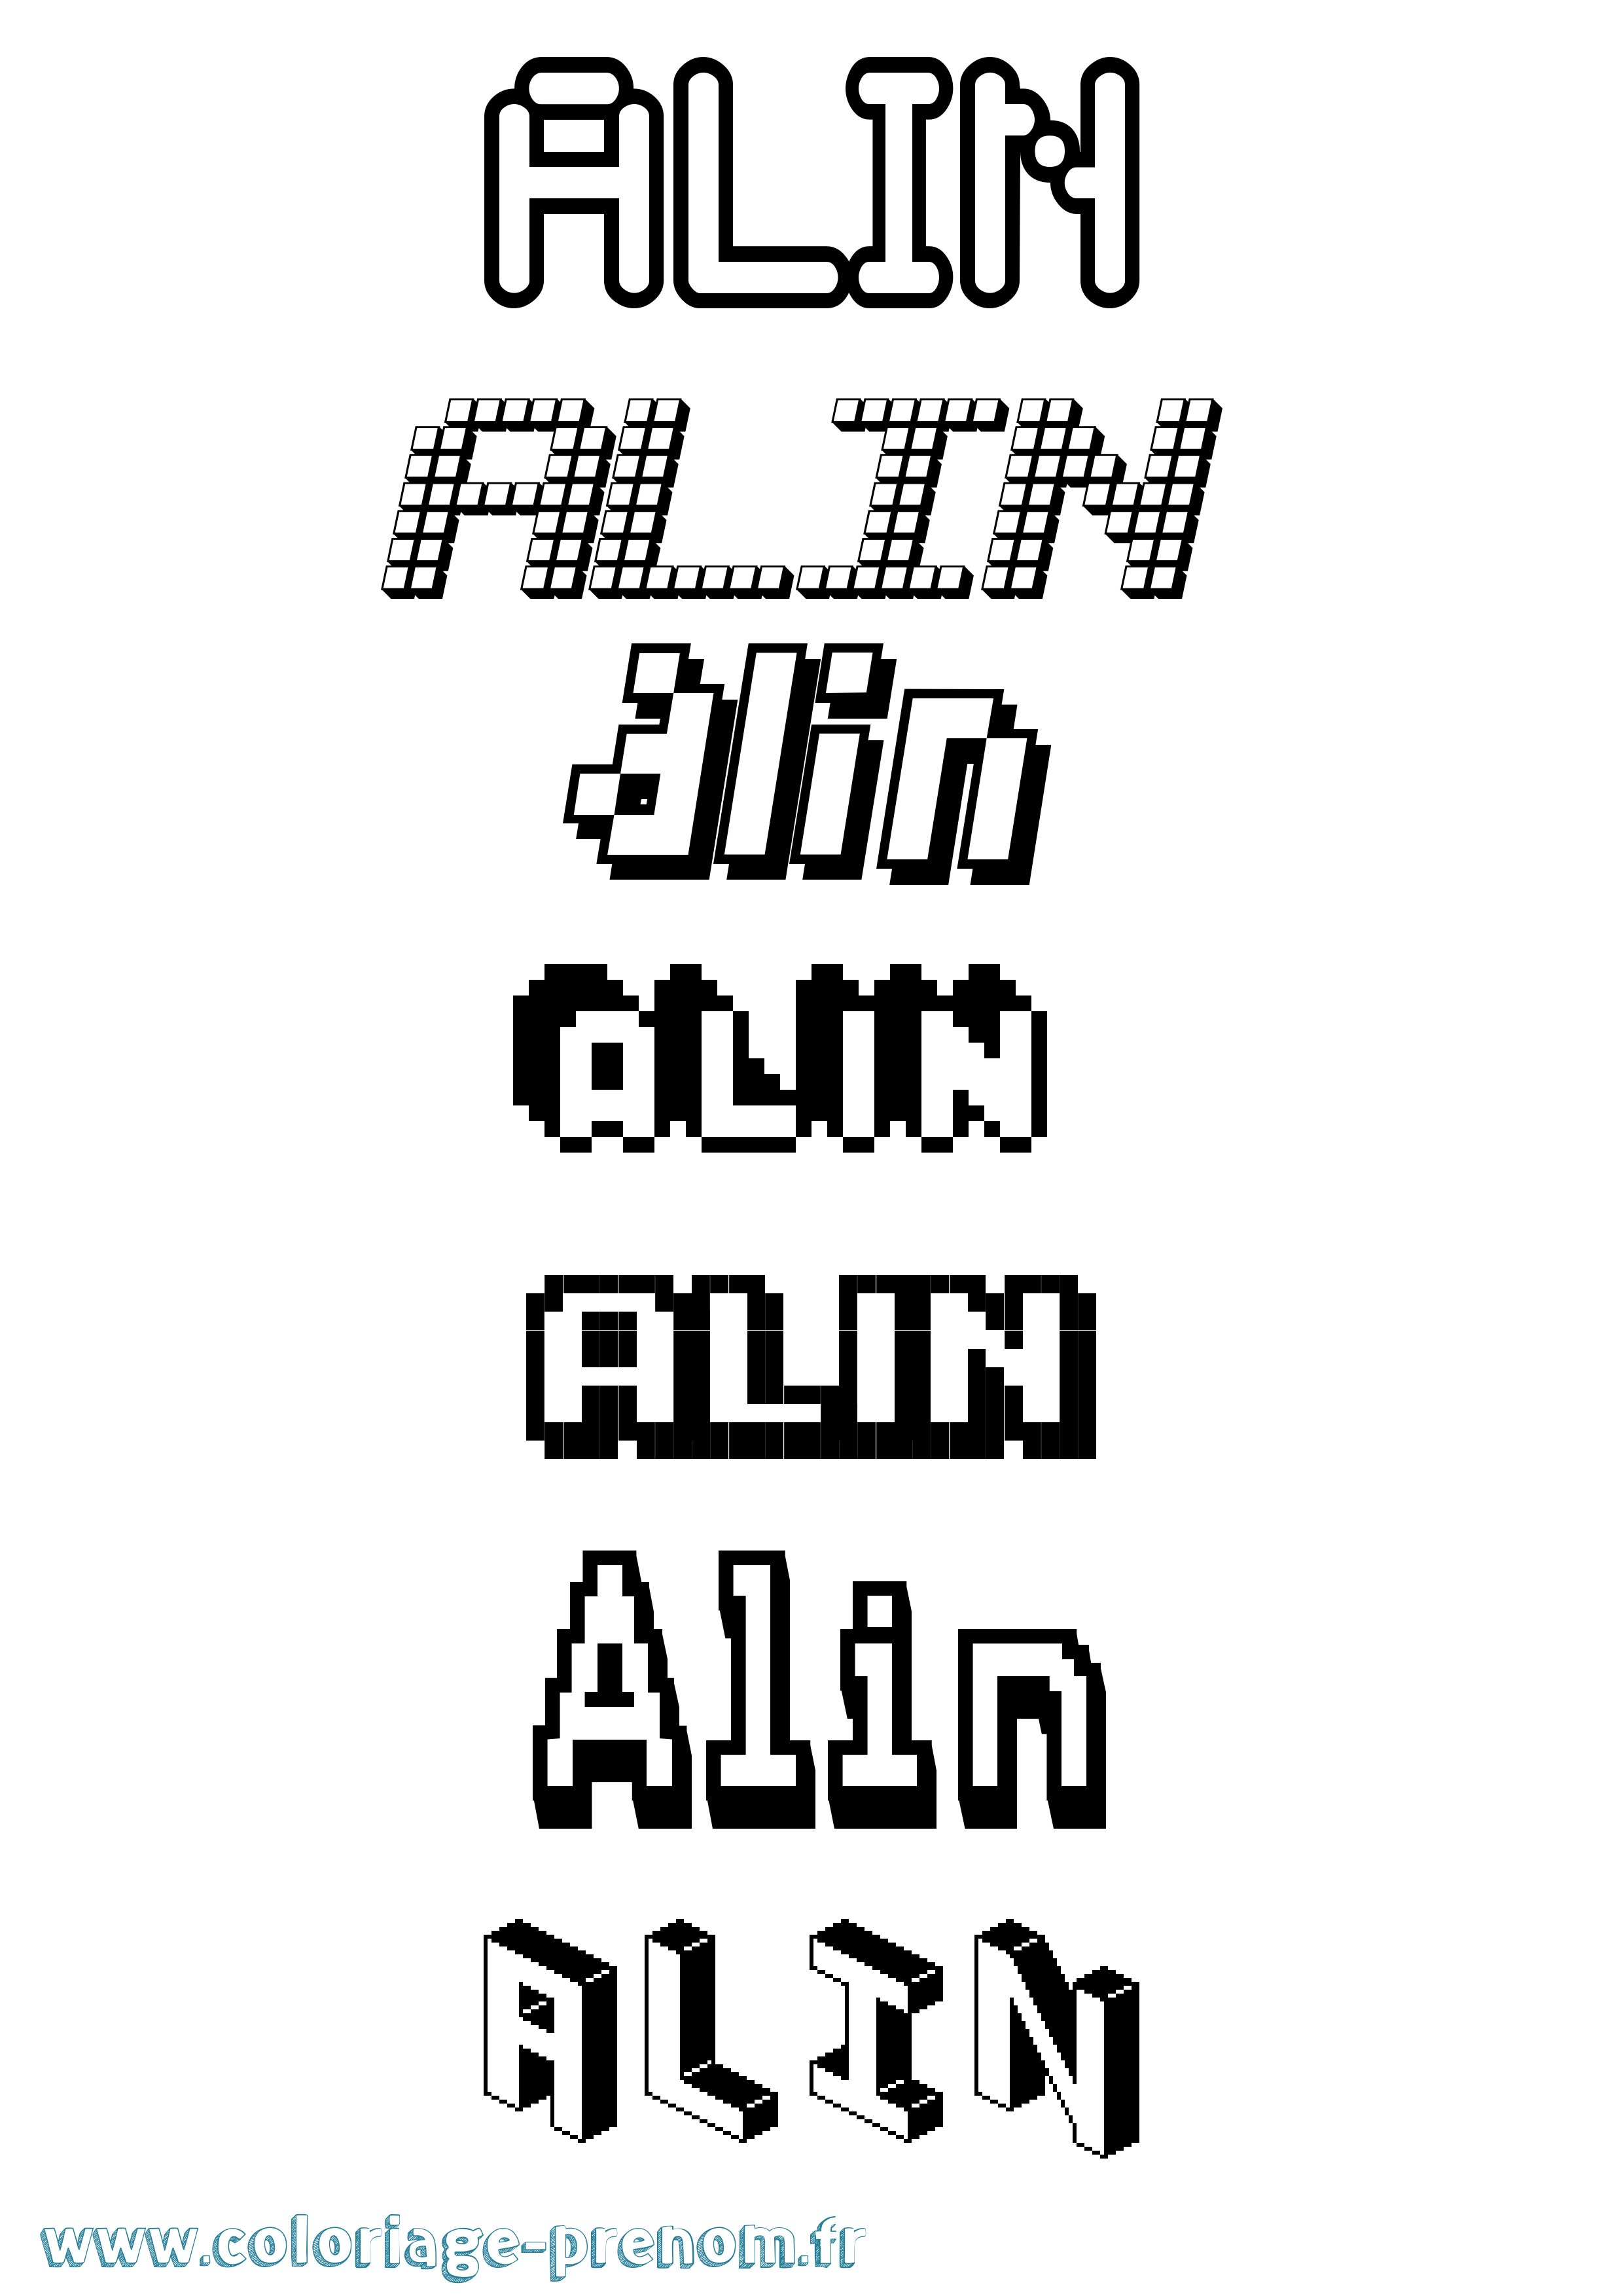 Coloriage prénom Alin Pixel